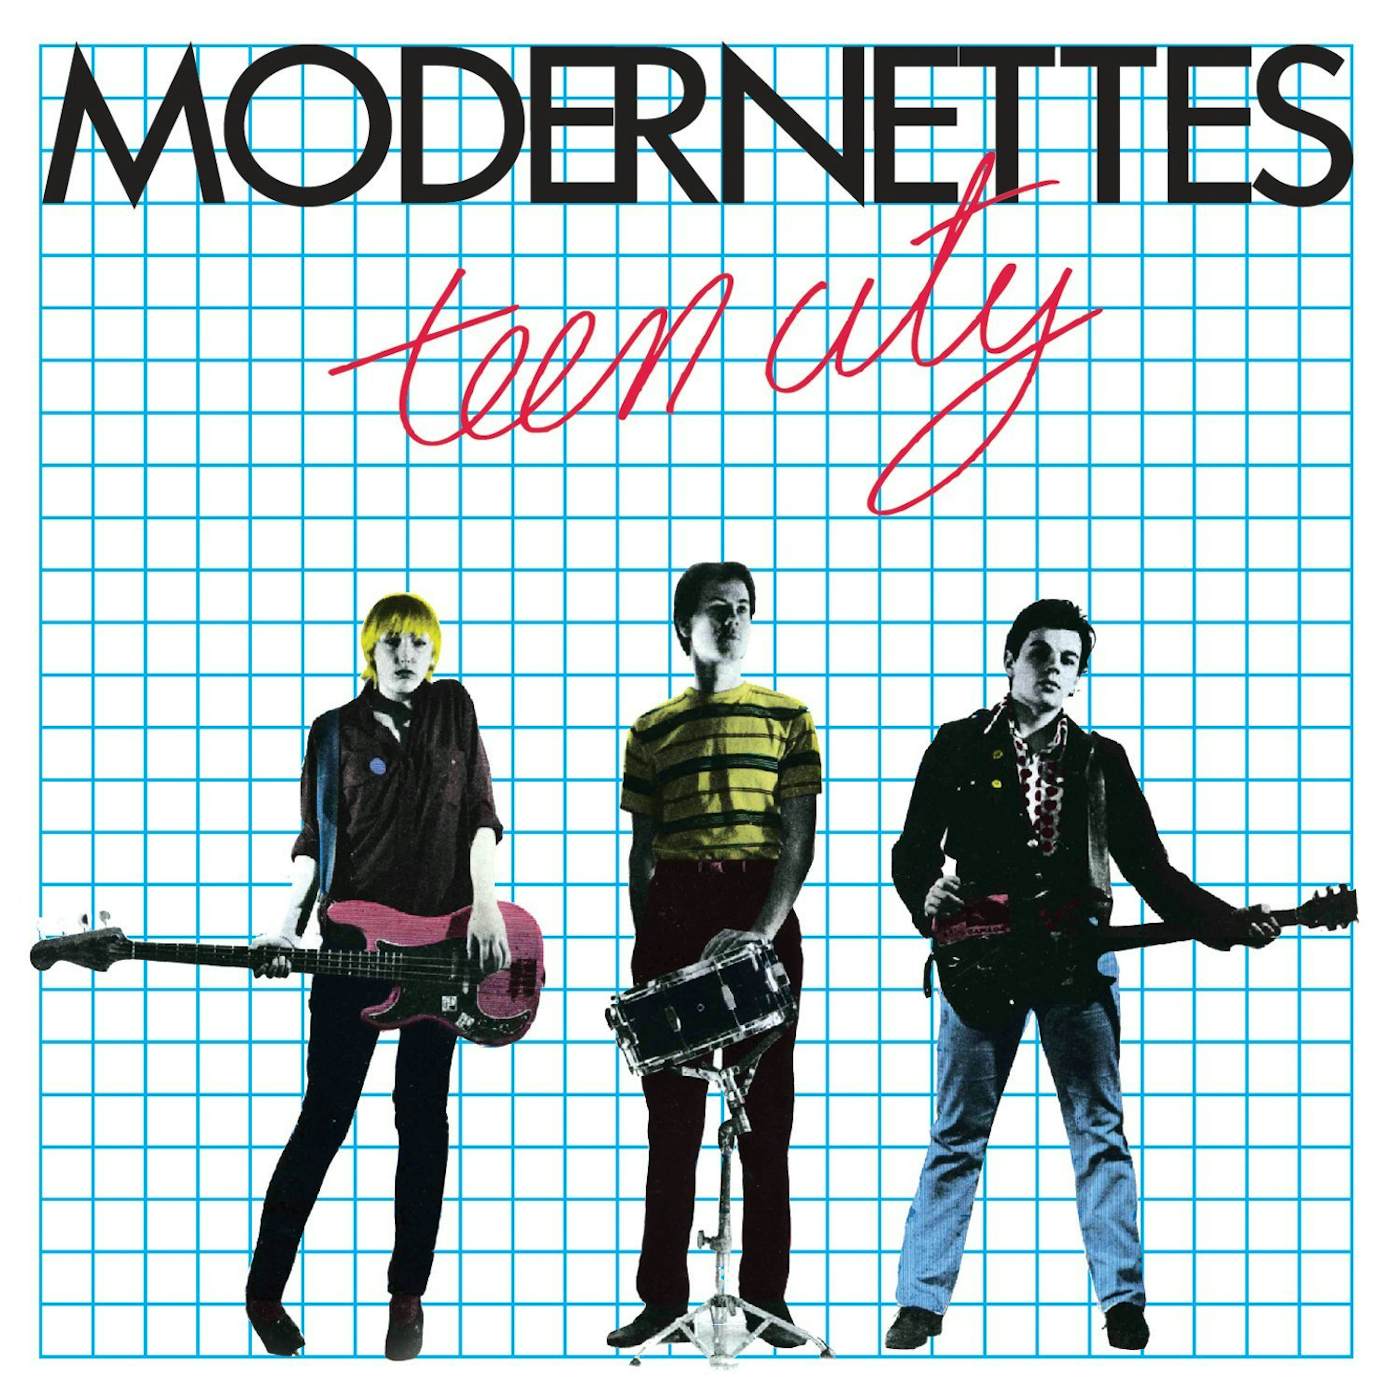 Modernettes TEEN CITY-35TH ANNIVERSARY CD